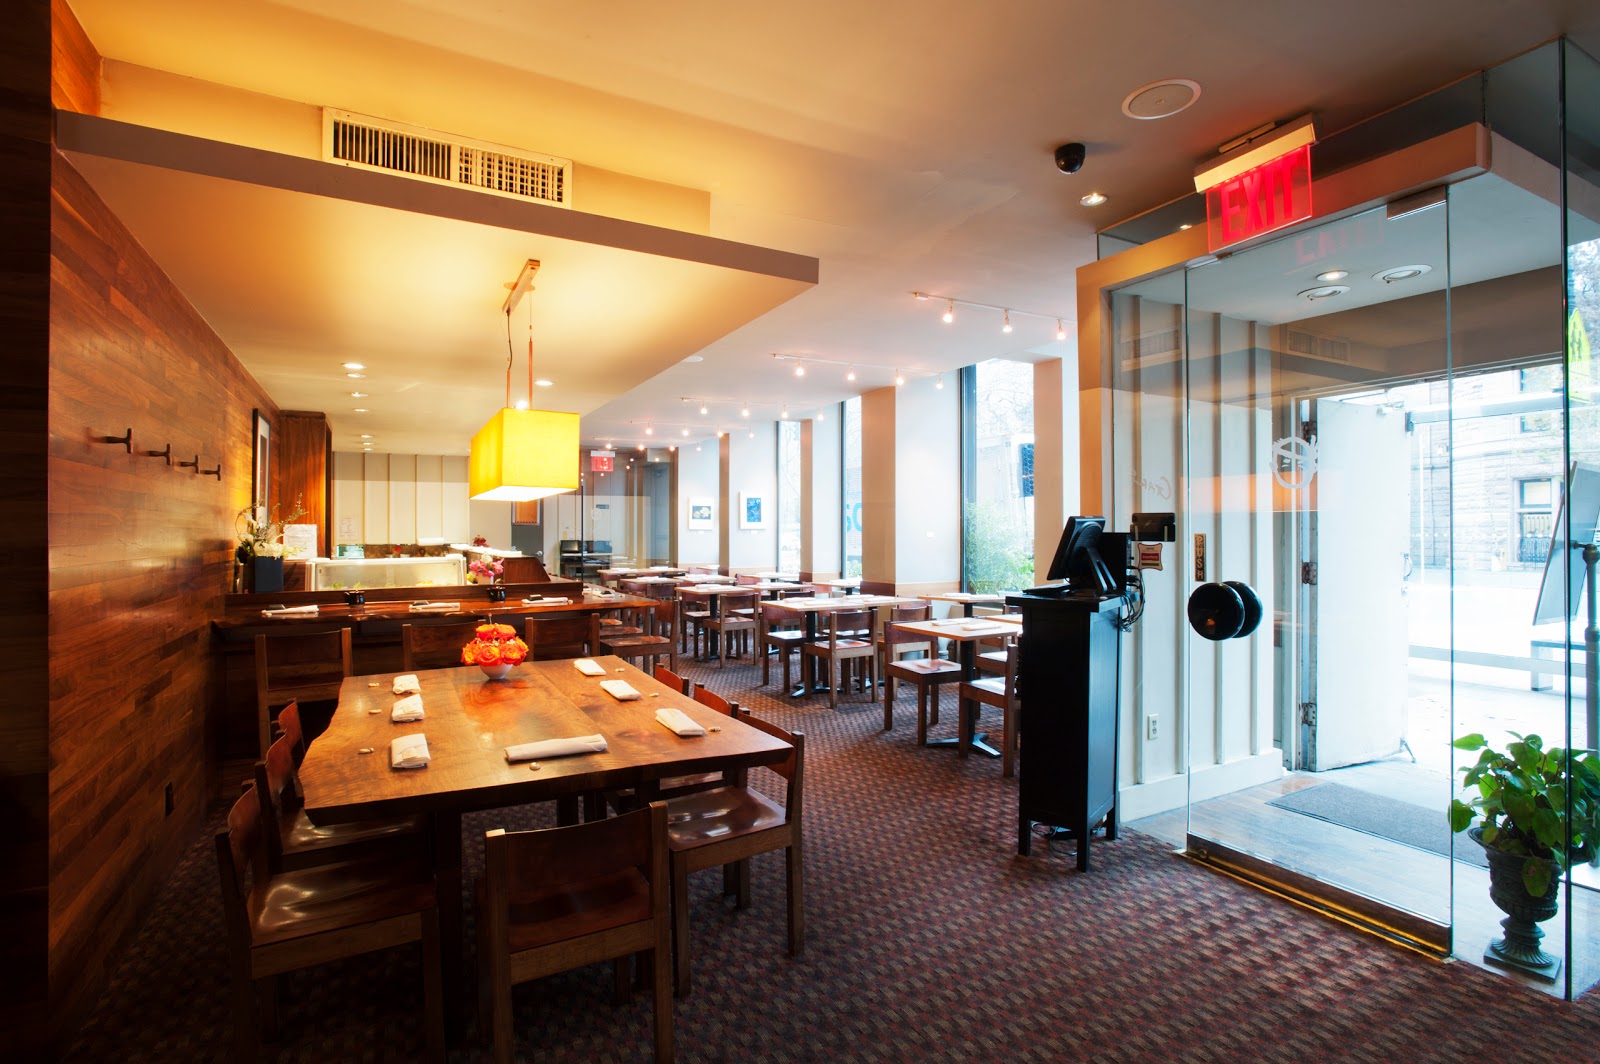 Photo of Gari Columbus in New York City, New York, United States - 2 Picture of Restaurant, Food, Point of interest, Establishment